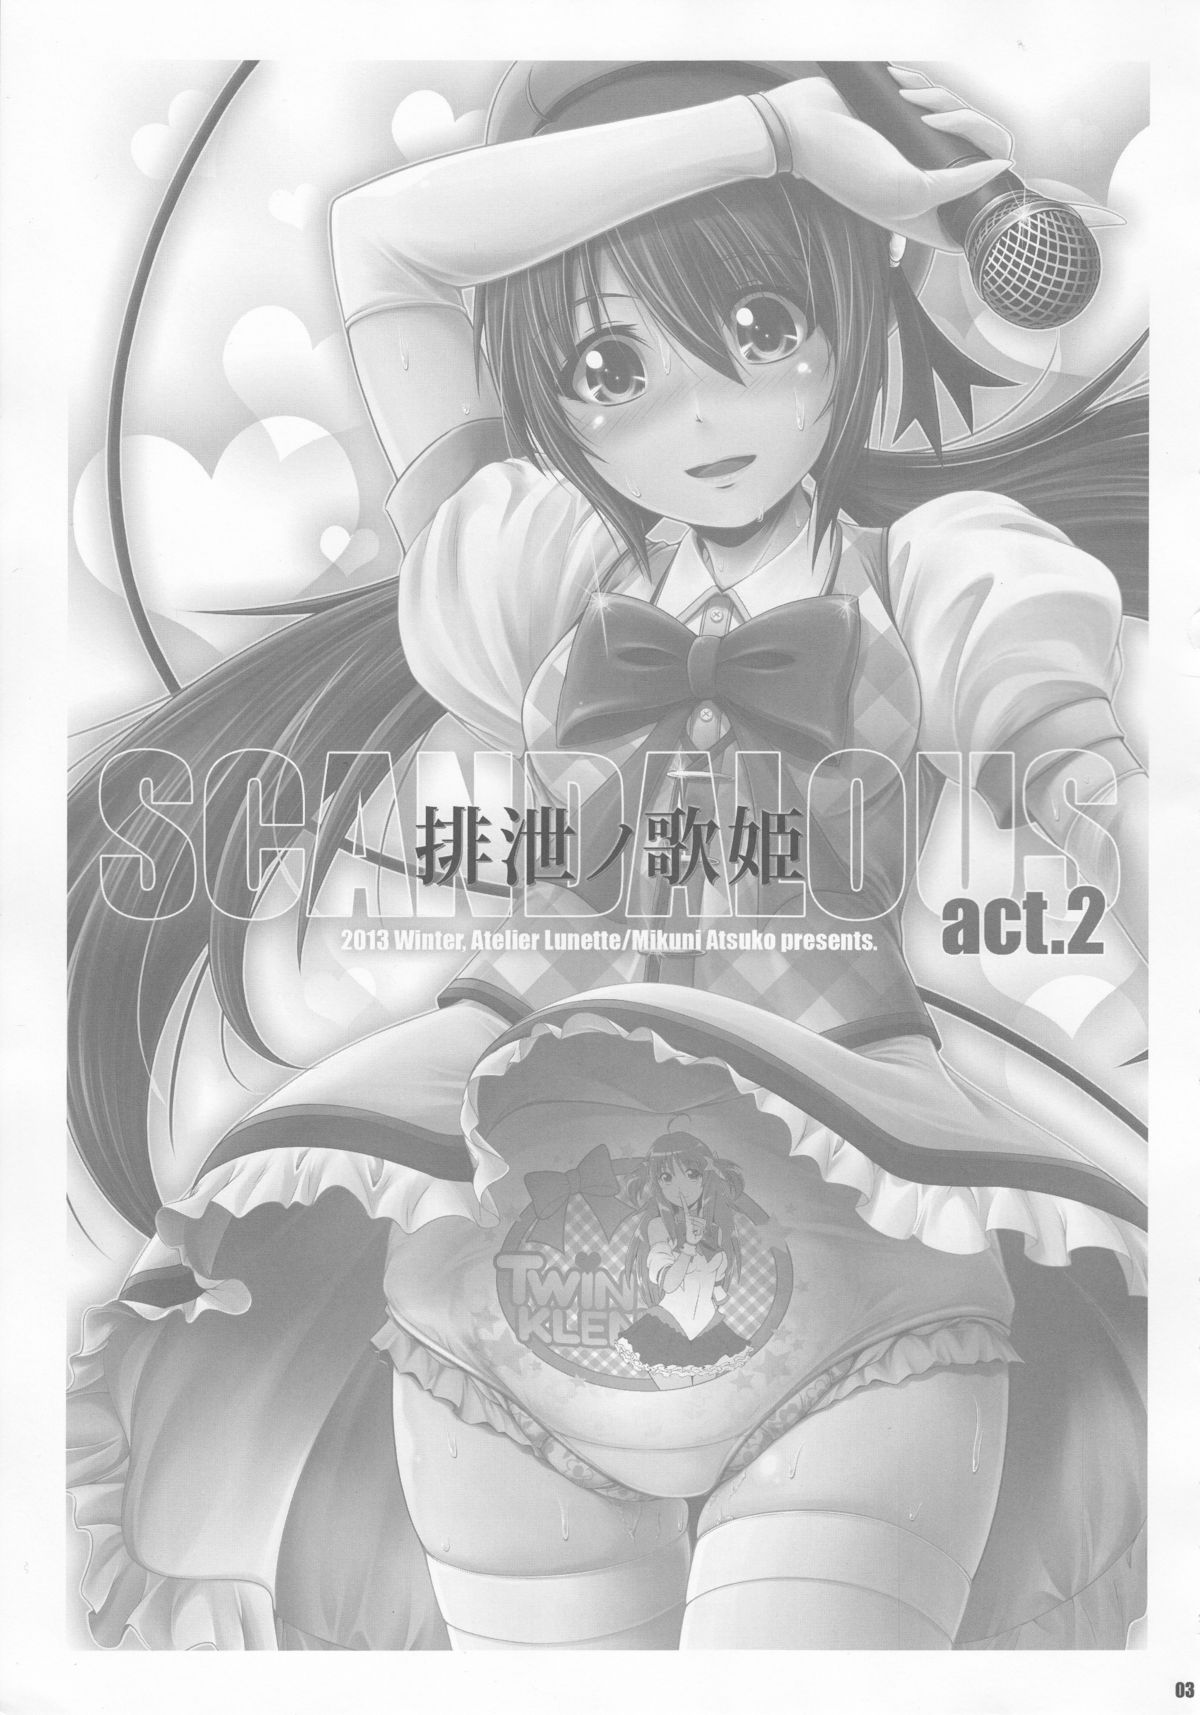 (C85) [Atelier Lunette (三国あつ子)] SCANDALOUS -排泄ノ歌姫- act.2